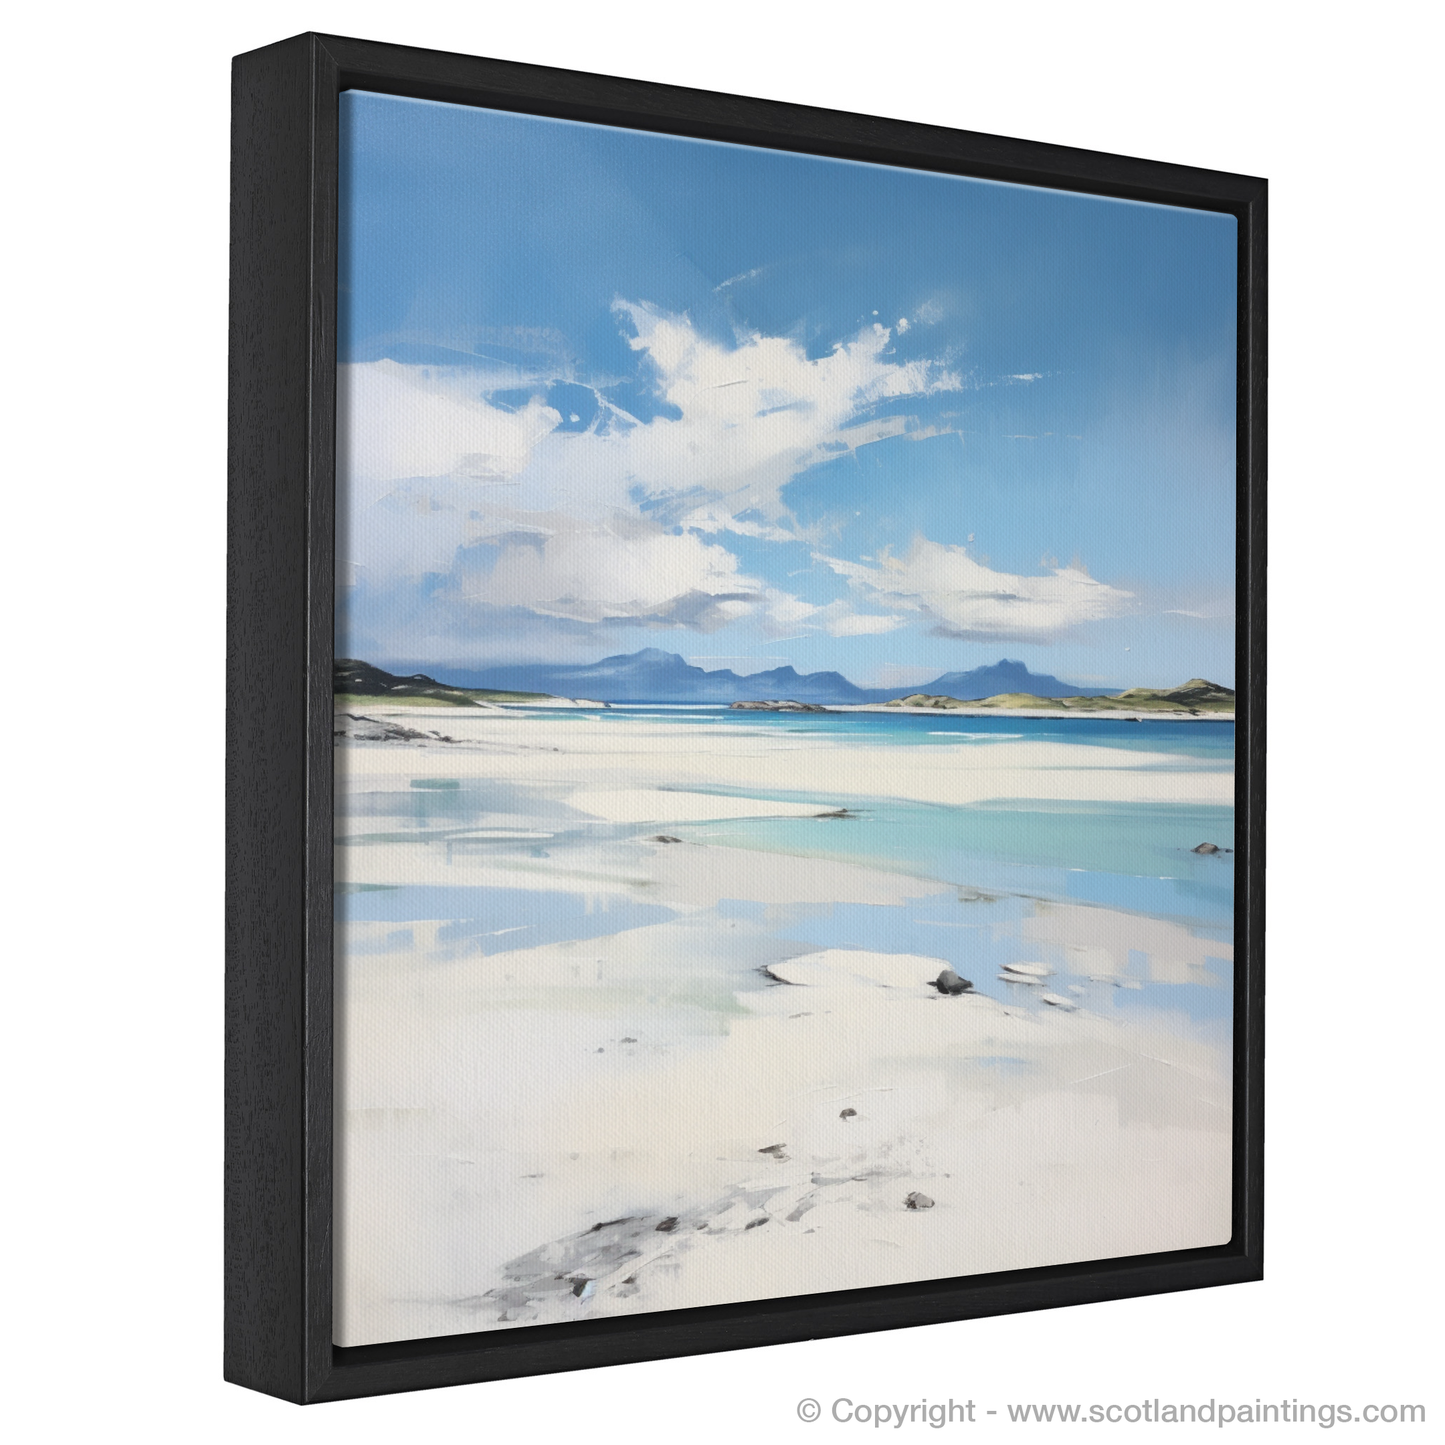 Painting and Art Print of Camusdarach Beach, Arisaig entitled "Serenity of Camusdarach Beach: A Scottish Coastal Gem".